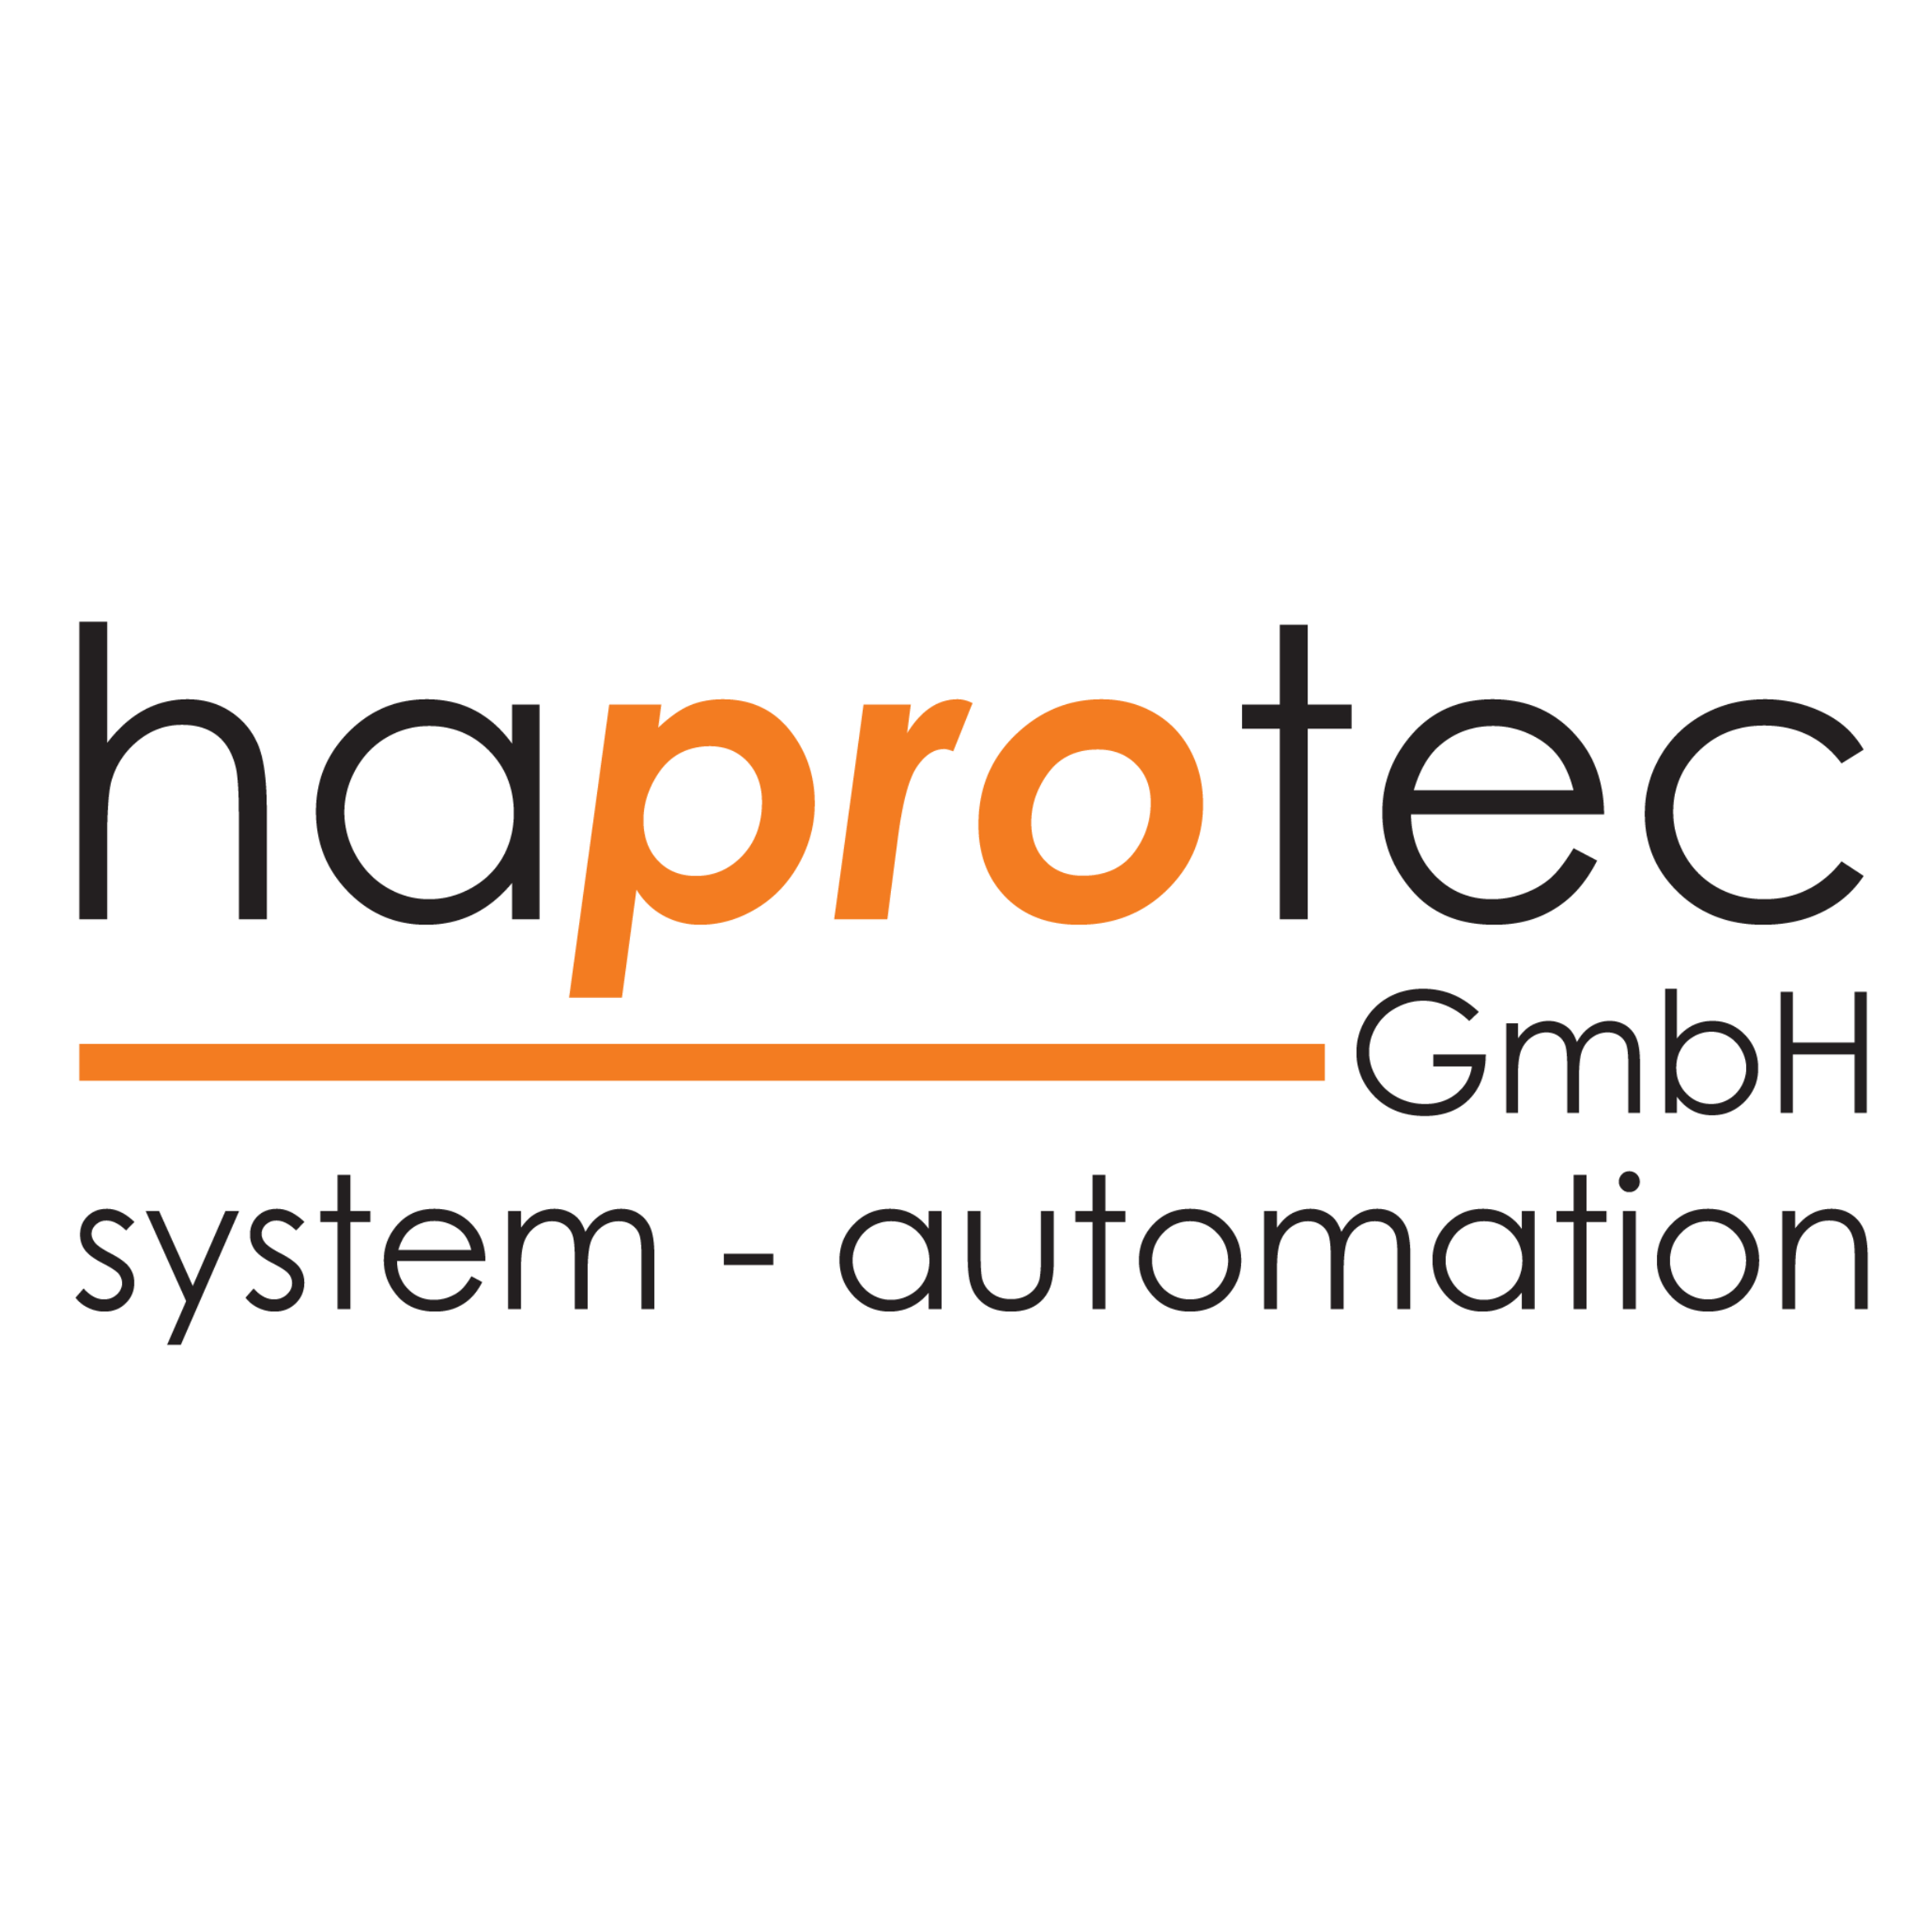 Logo haprotec GmbH